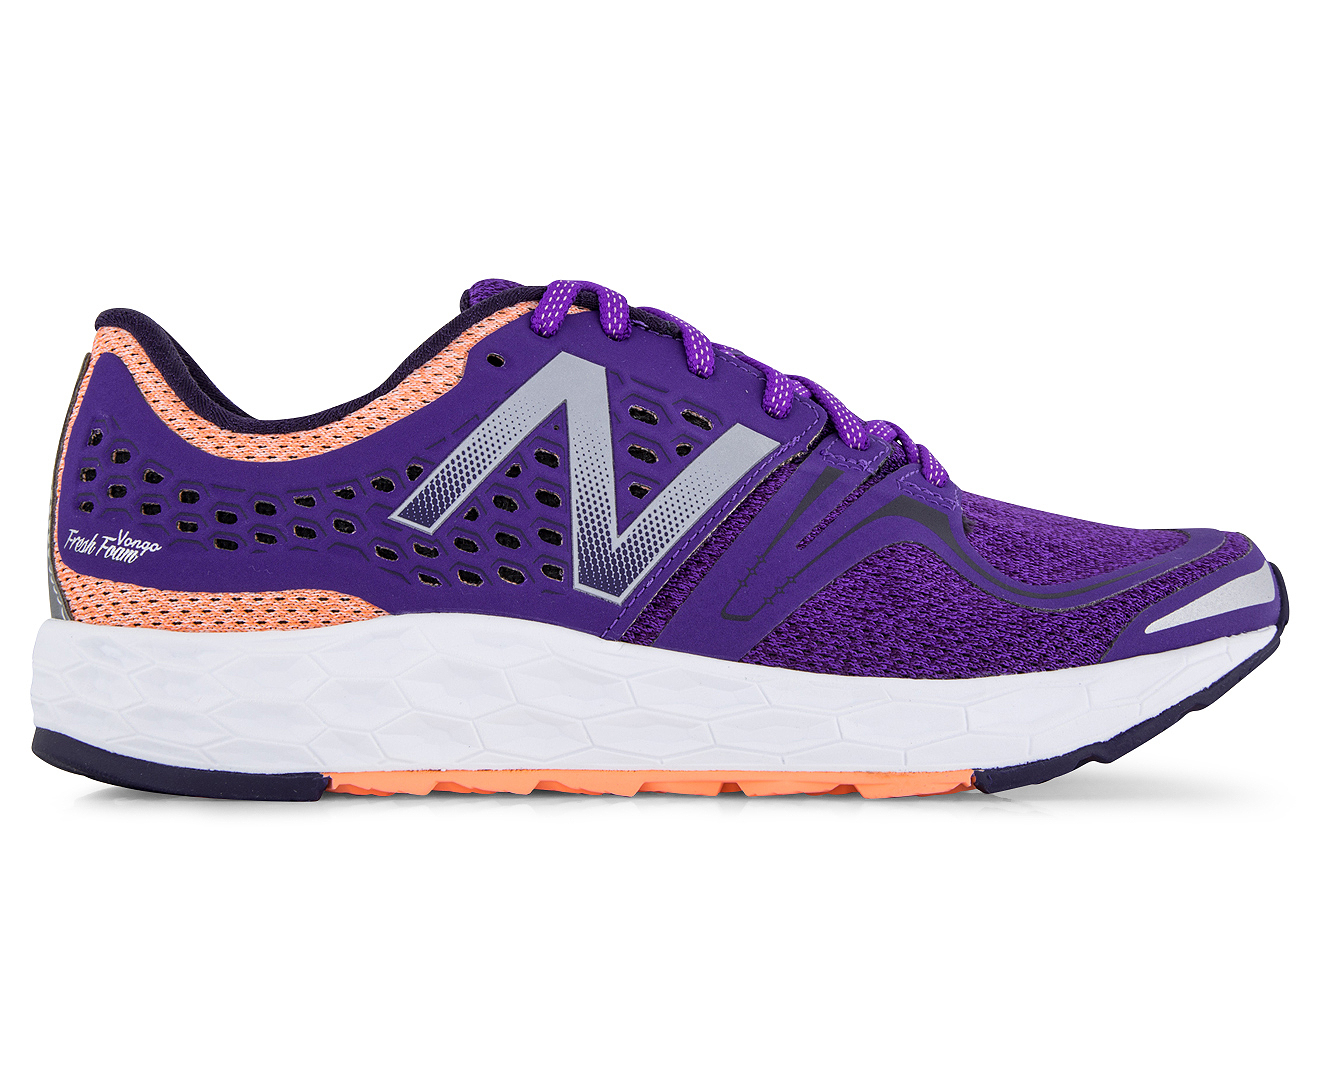 New Balance Women's Vongo Running Shoe - Purple | Catch.com.au